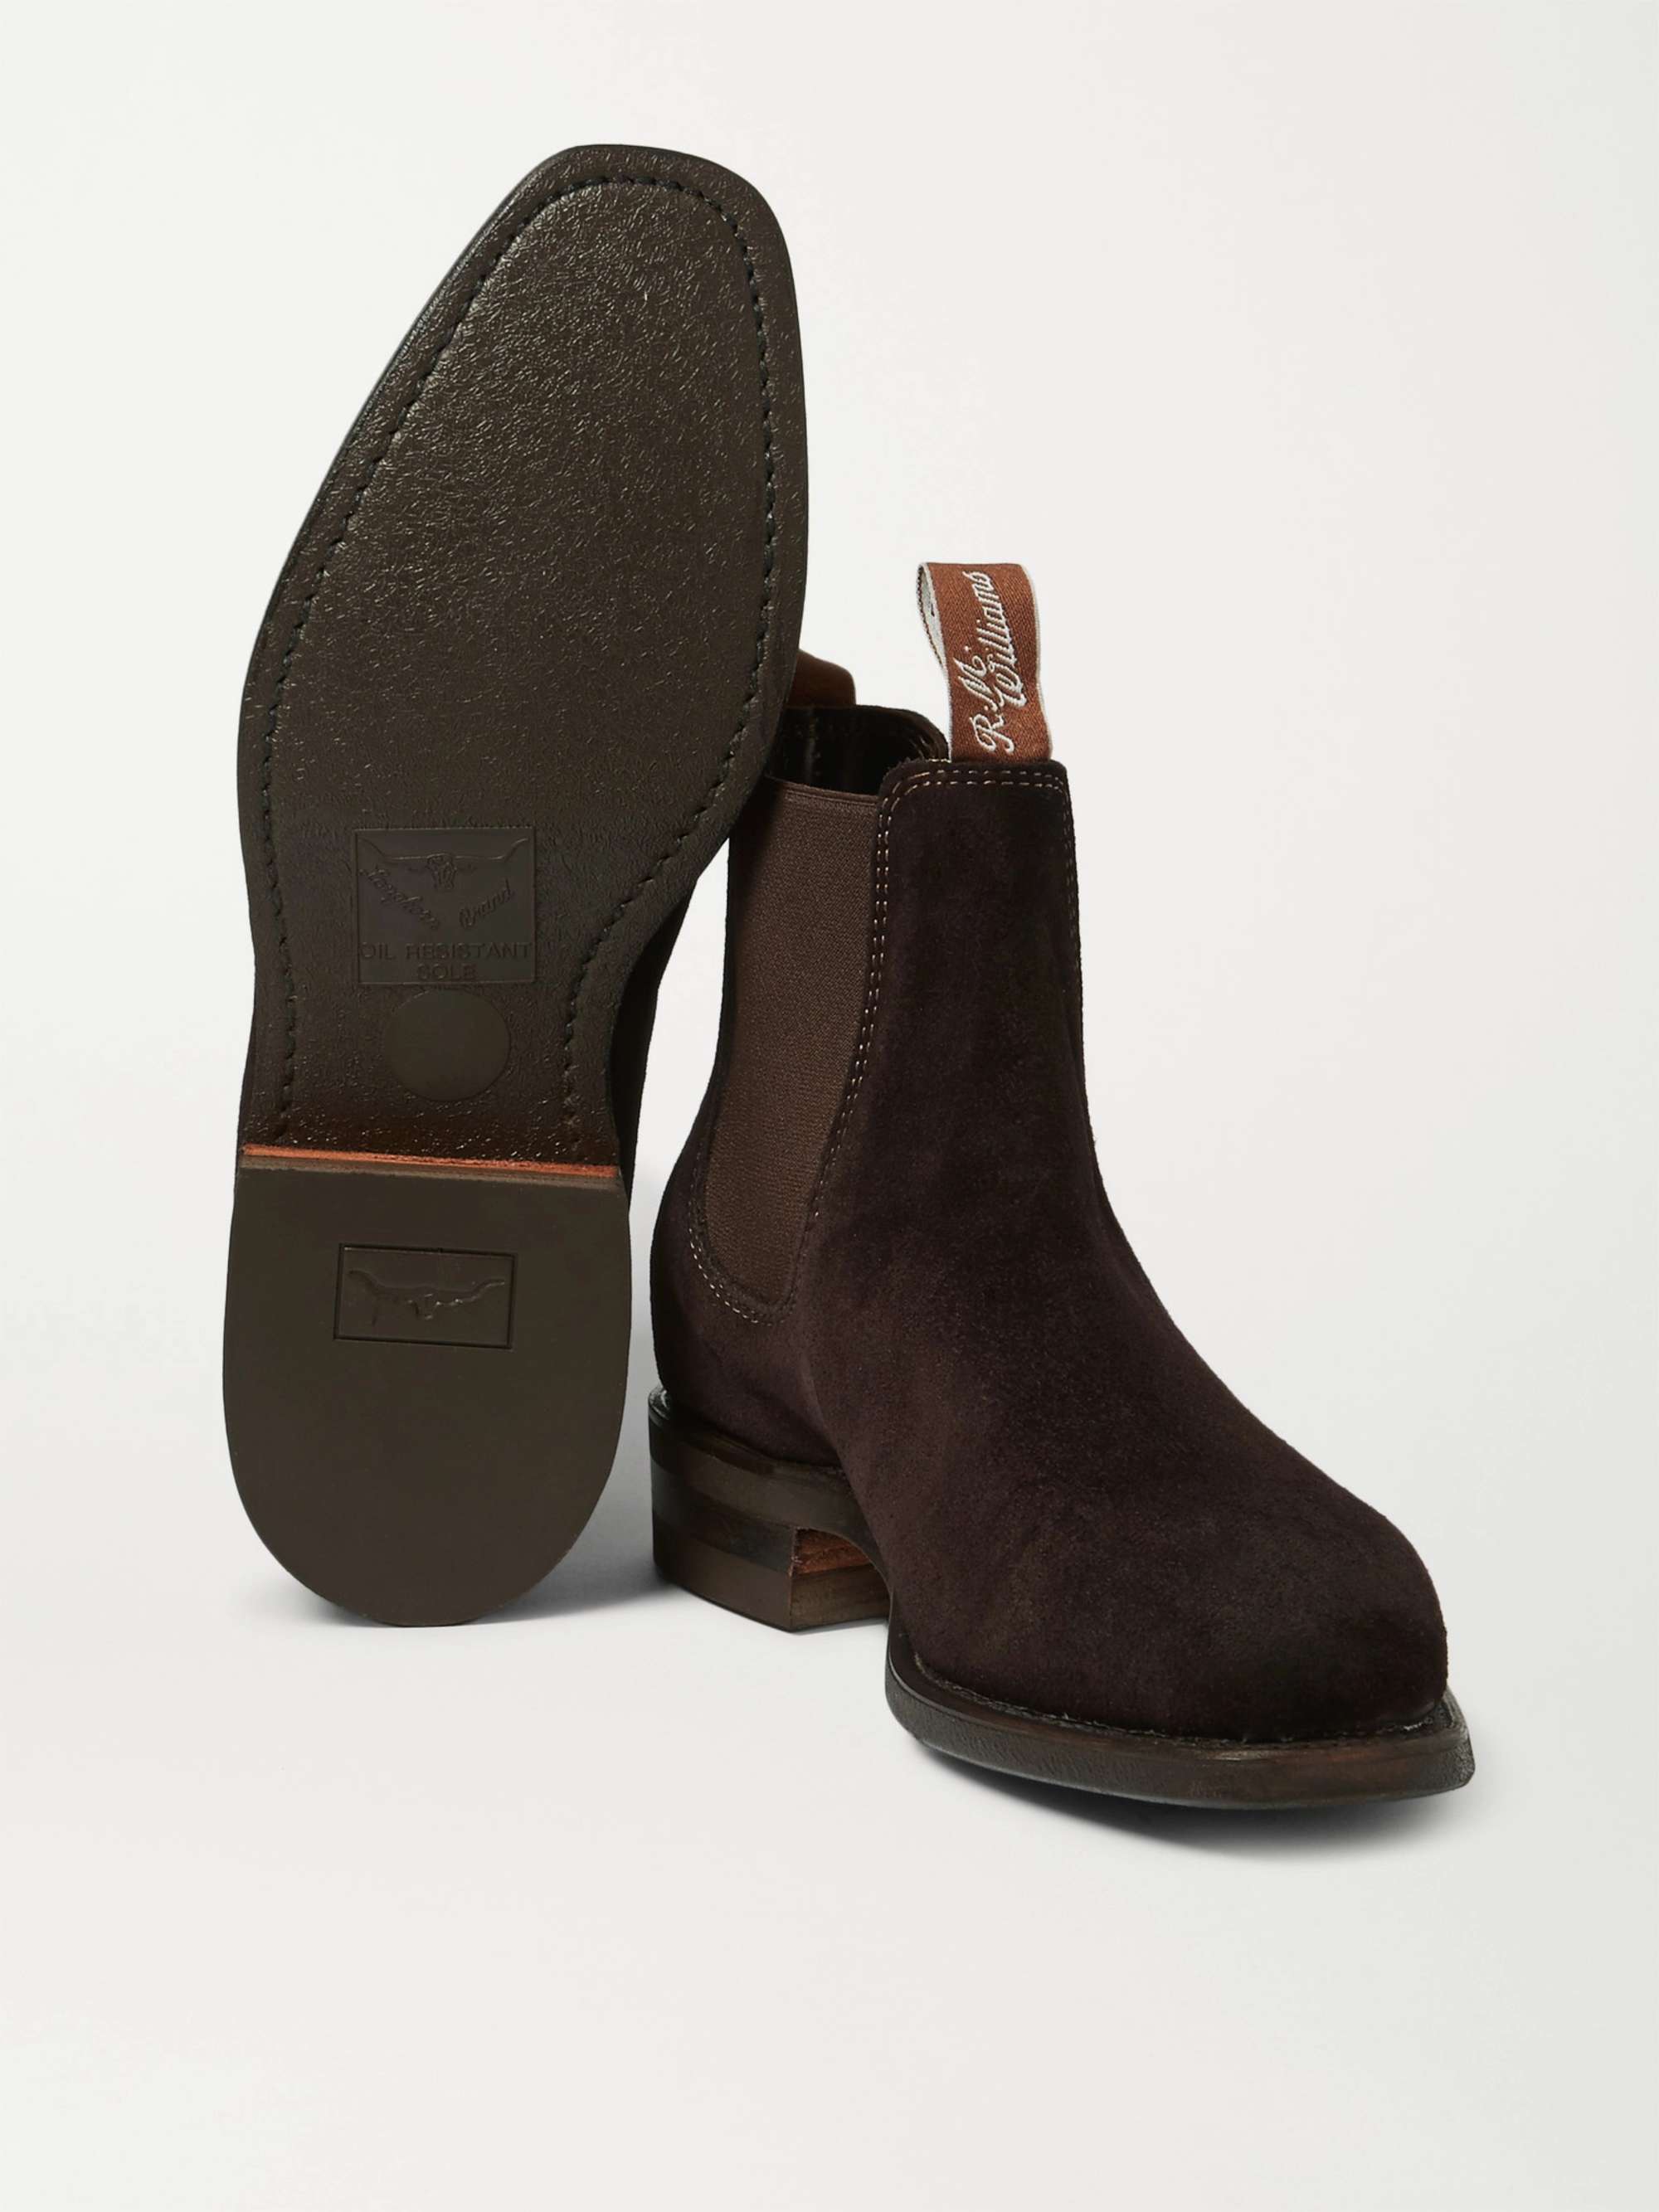 Chocolate Comfort Craftsman Suede Chelsea Boots | R.M.WILLIAMS | MR PORTER